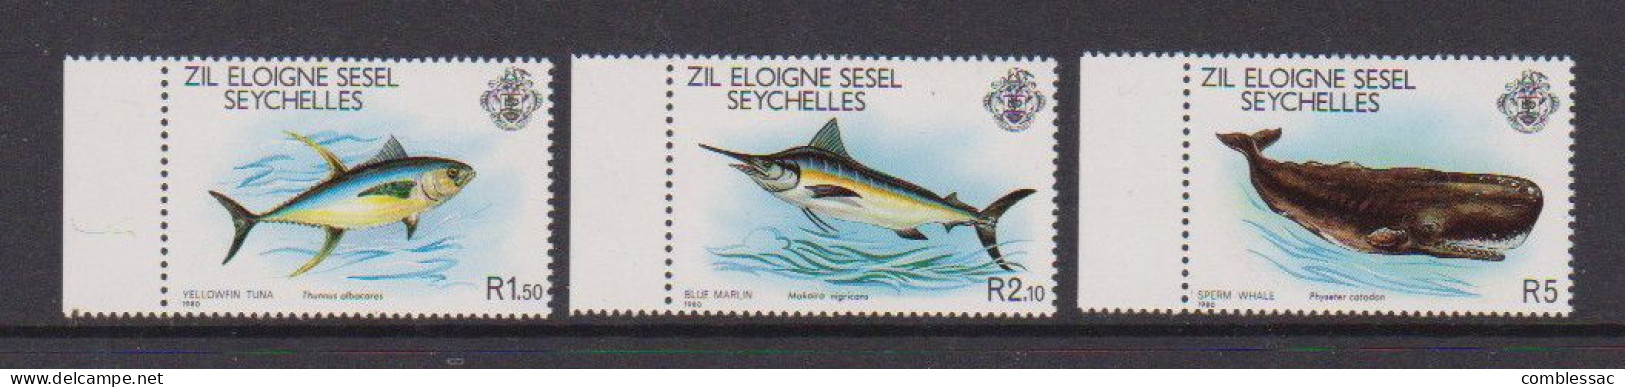 SEYCHELLES  ZIL ELWAGNE  SESEL    1980    Marine  Life    Set  Of  3   MNH - Seychellen (1976-...)